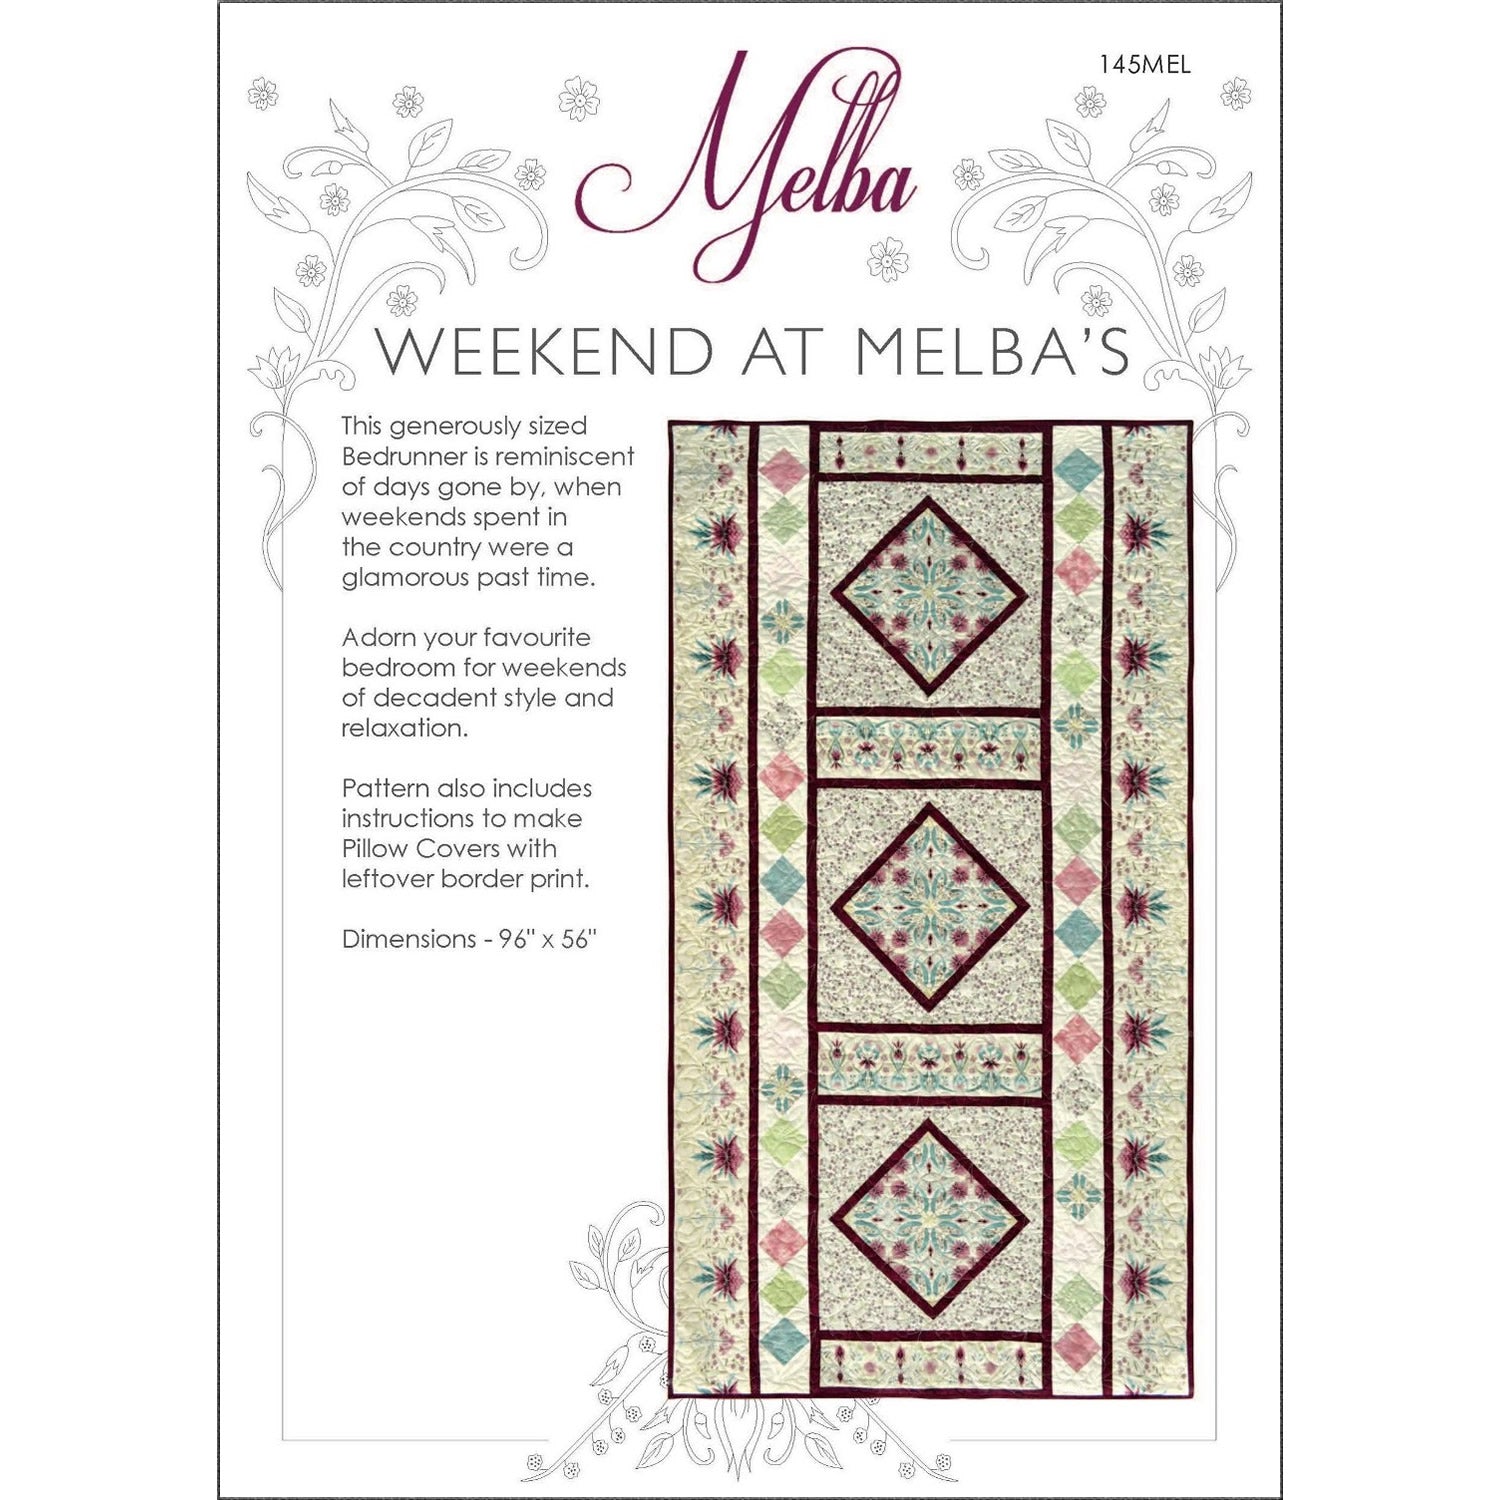 Weekend at Melba's - 145MEL